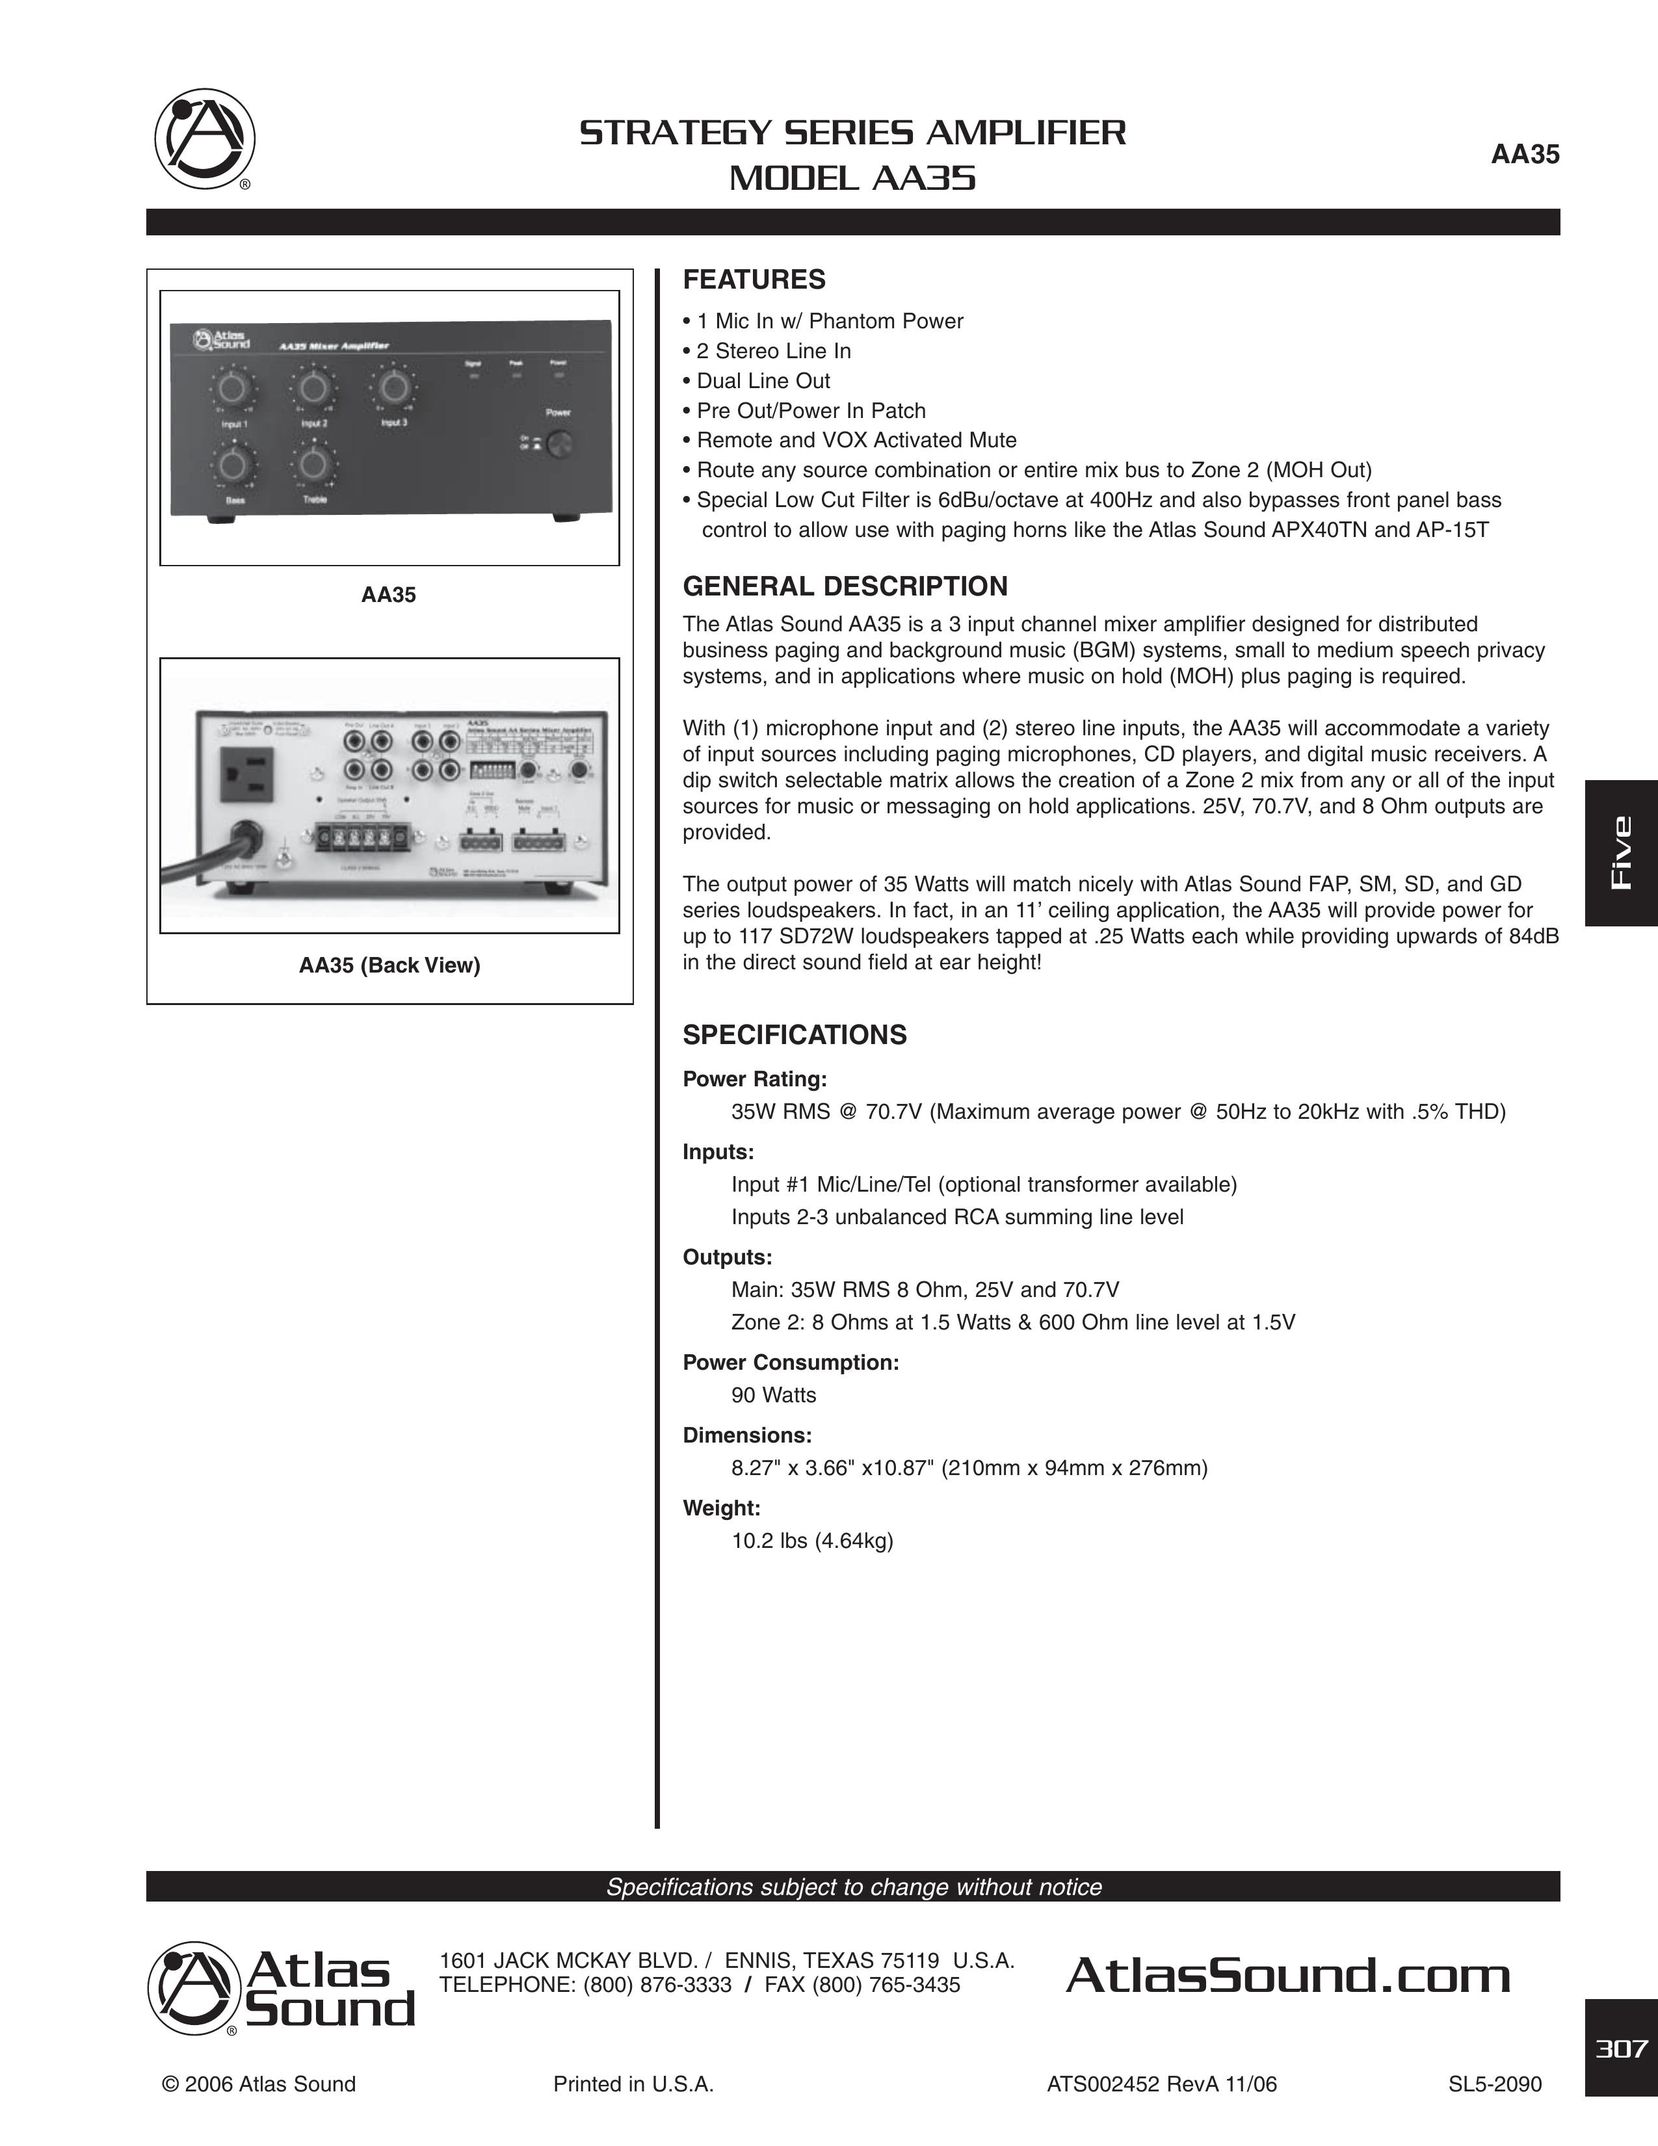 Atlas Sound AA35 Stereo Amplifier User Manual